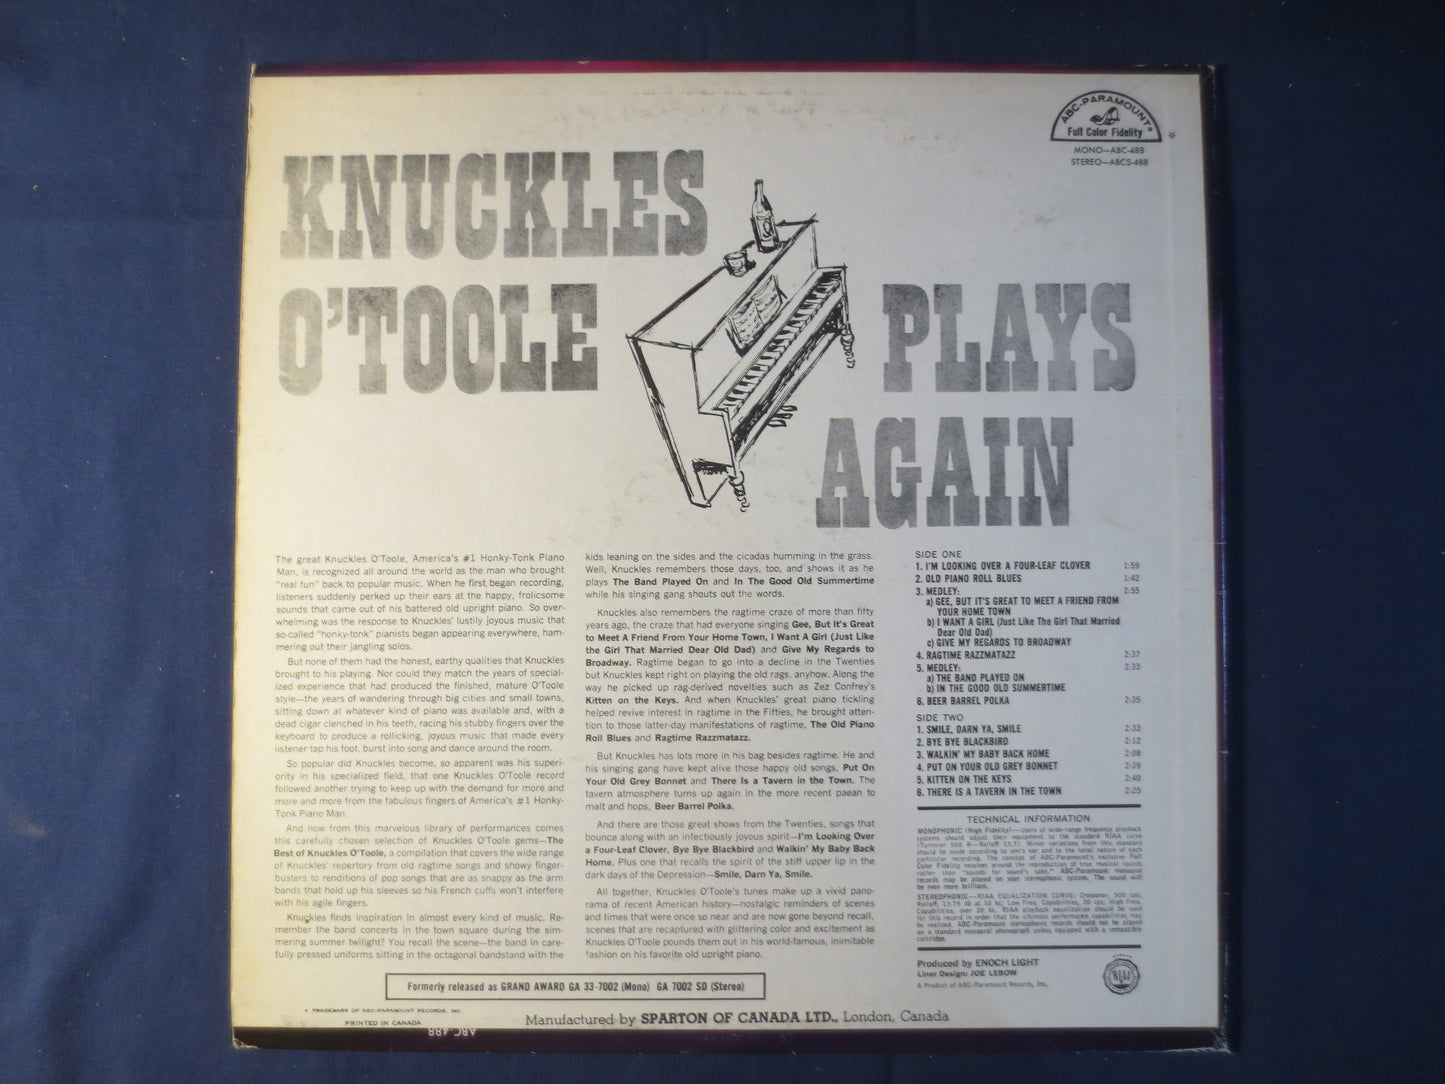 KNUCKLES O'TOOLE, PLAYS Again, Dick Hyman Records, Ragtime Records, Vintage Vinyl, Vinyl Record, Vinyl, Honky Tonk Records